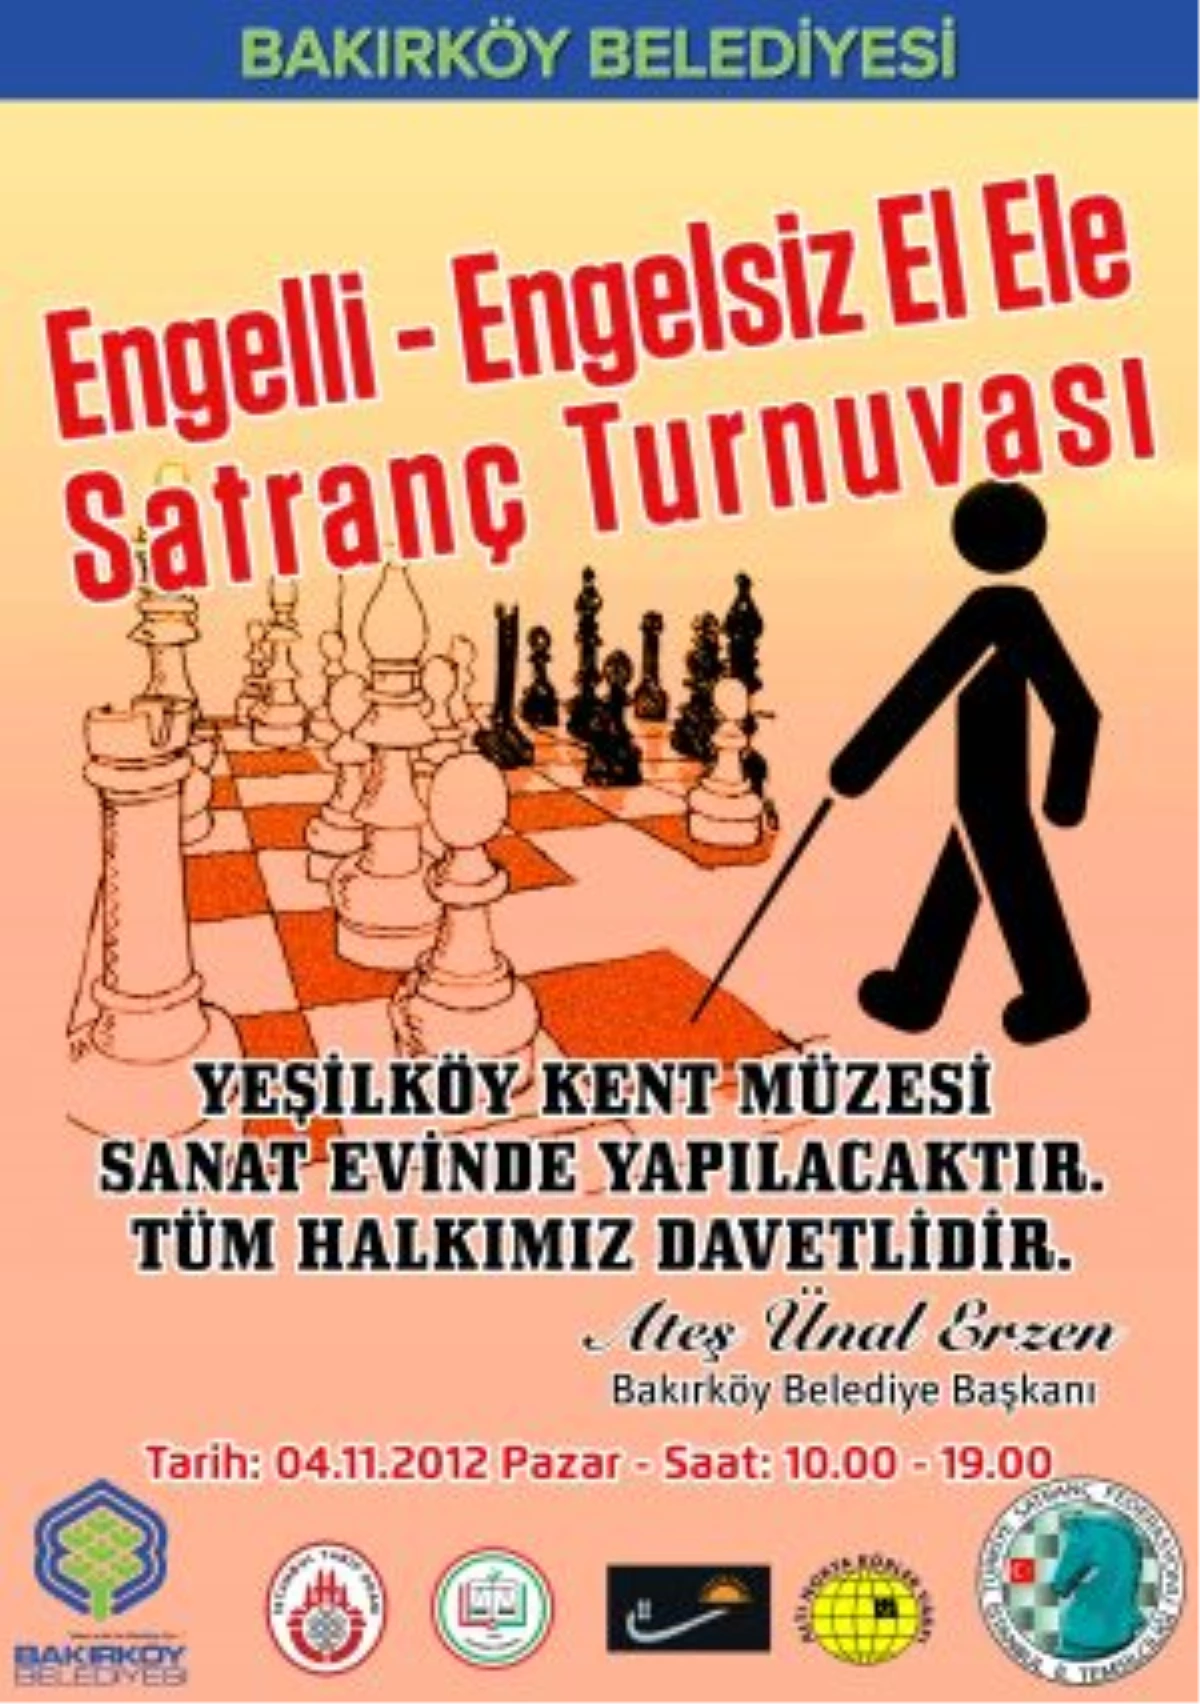 Engelli-Engelsiz El Ele Satranç Turnuvası